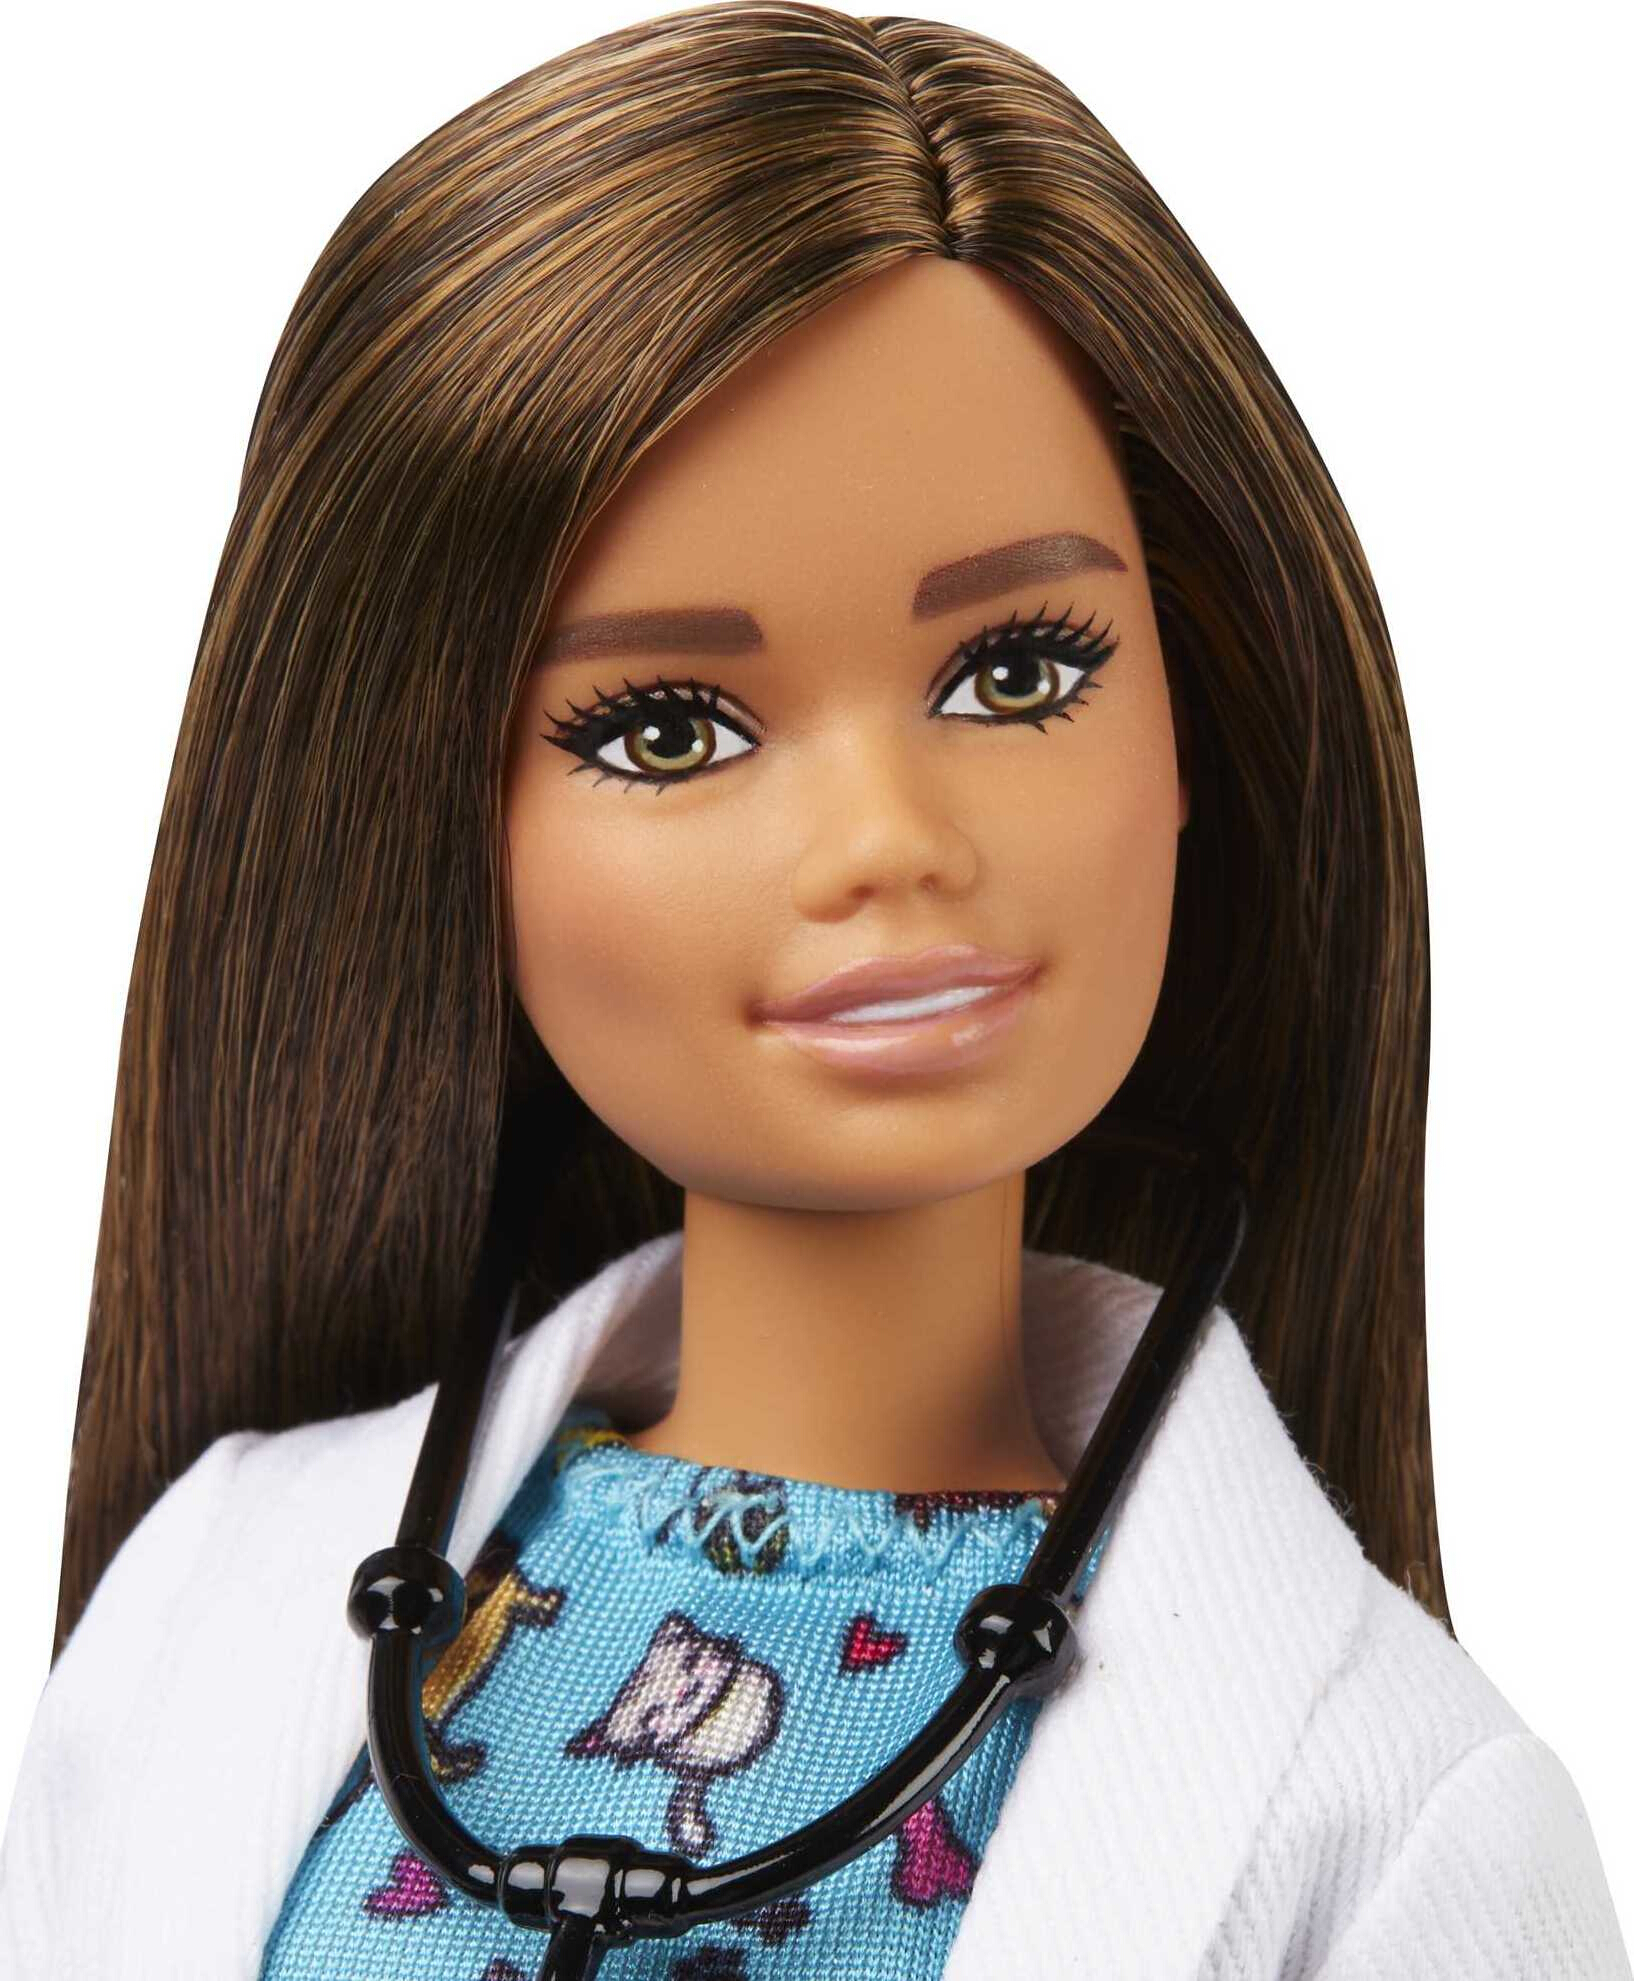 Barbie Pet Vet Fashion Doll Brunette with Medical Coat, Kitten Patient & Accessories - image 3 of 6